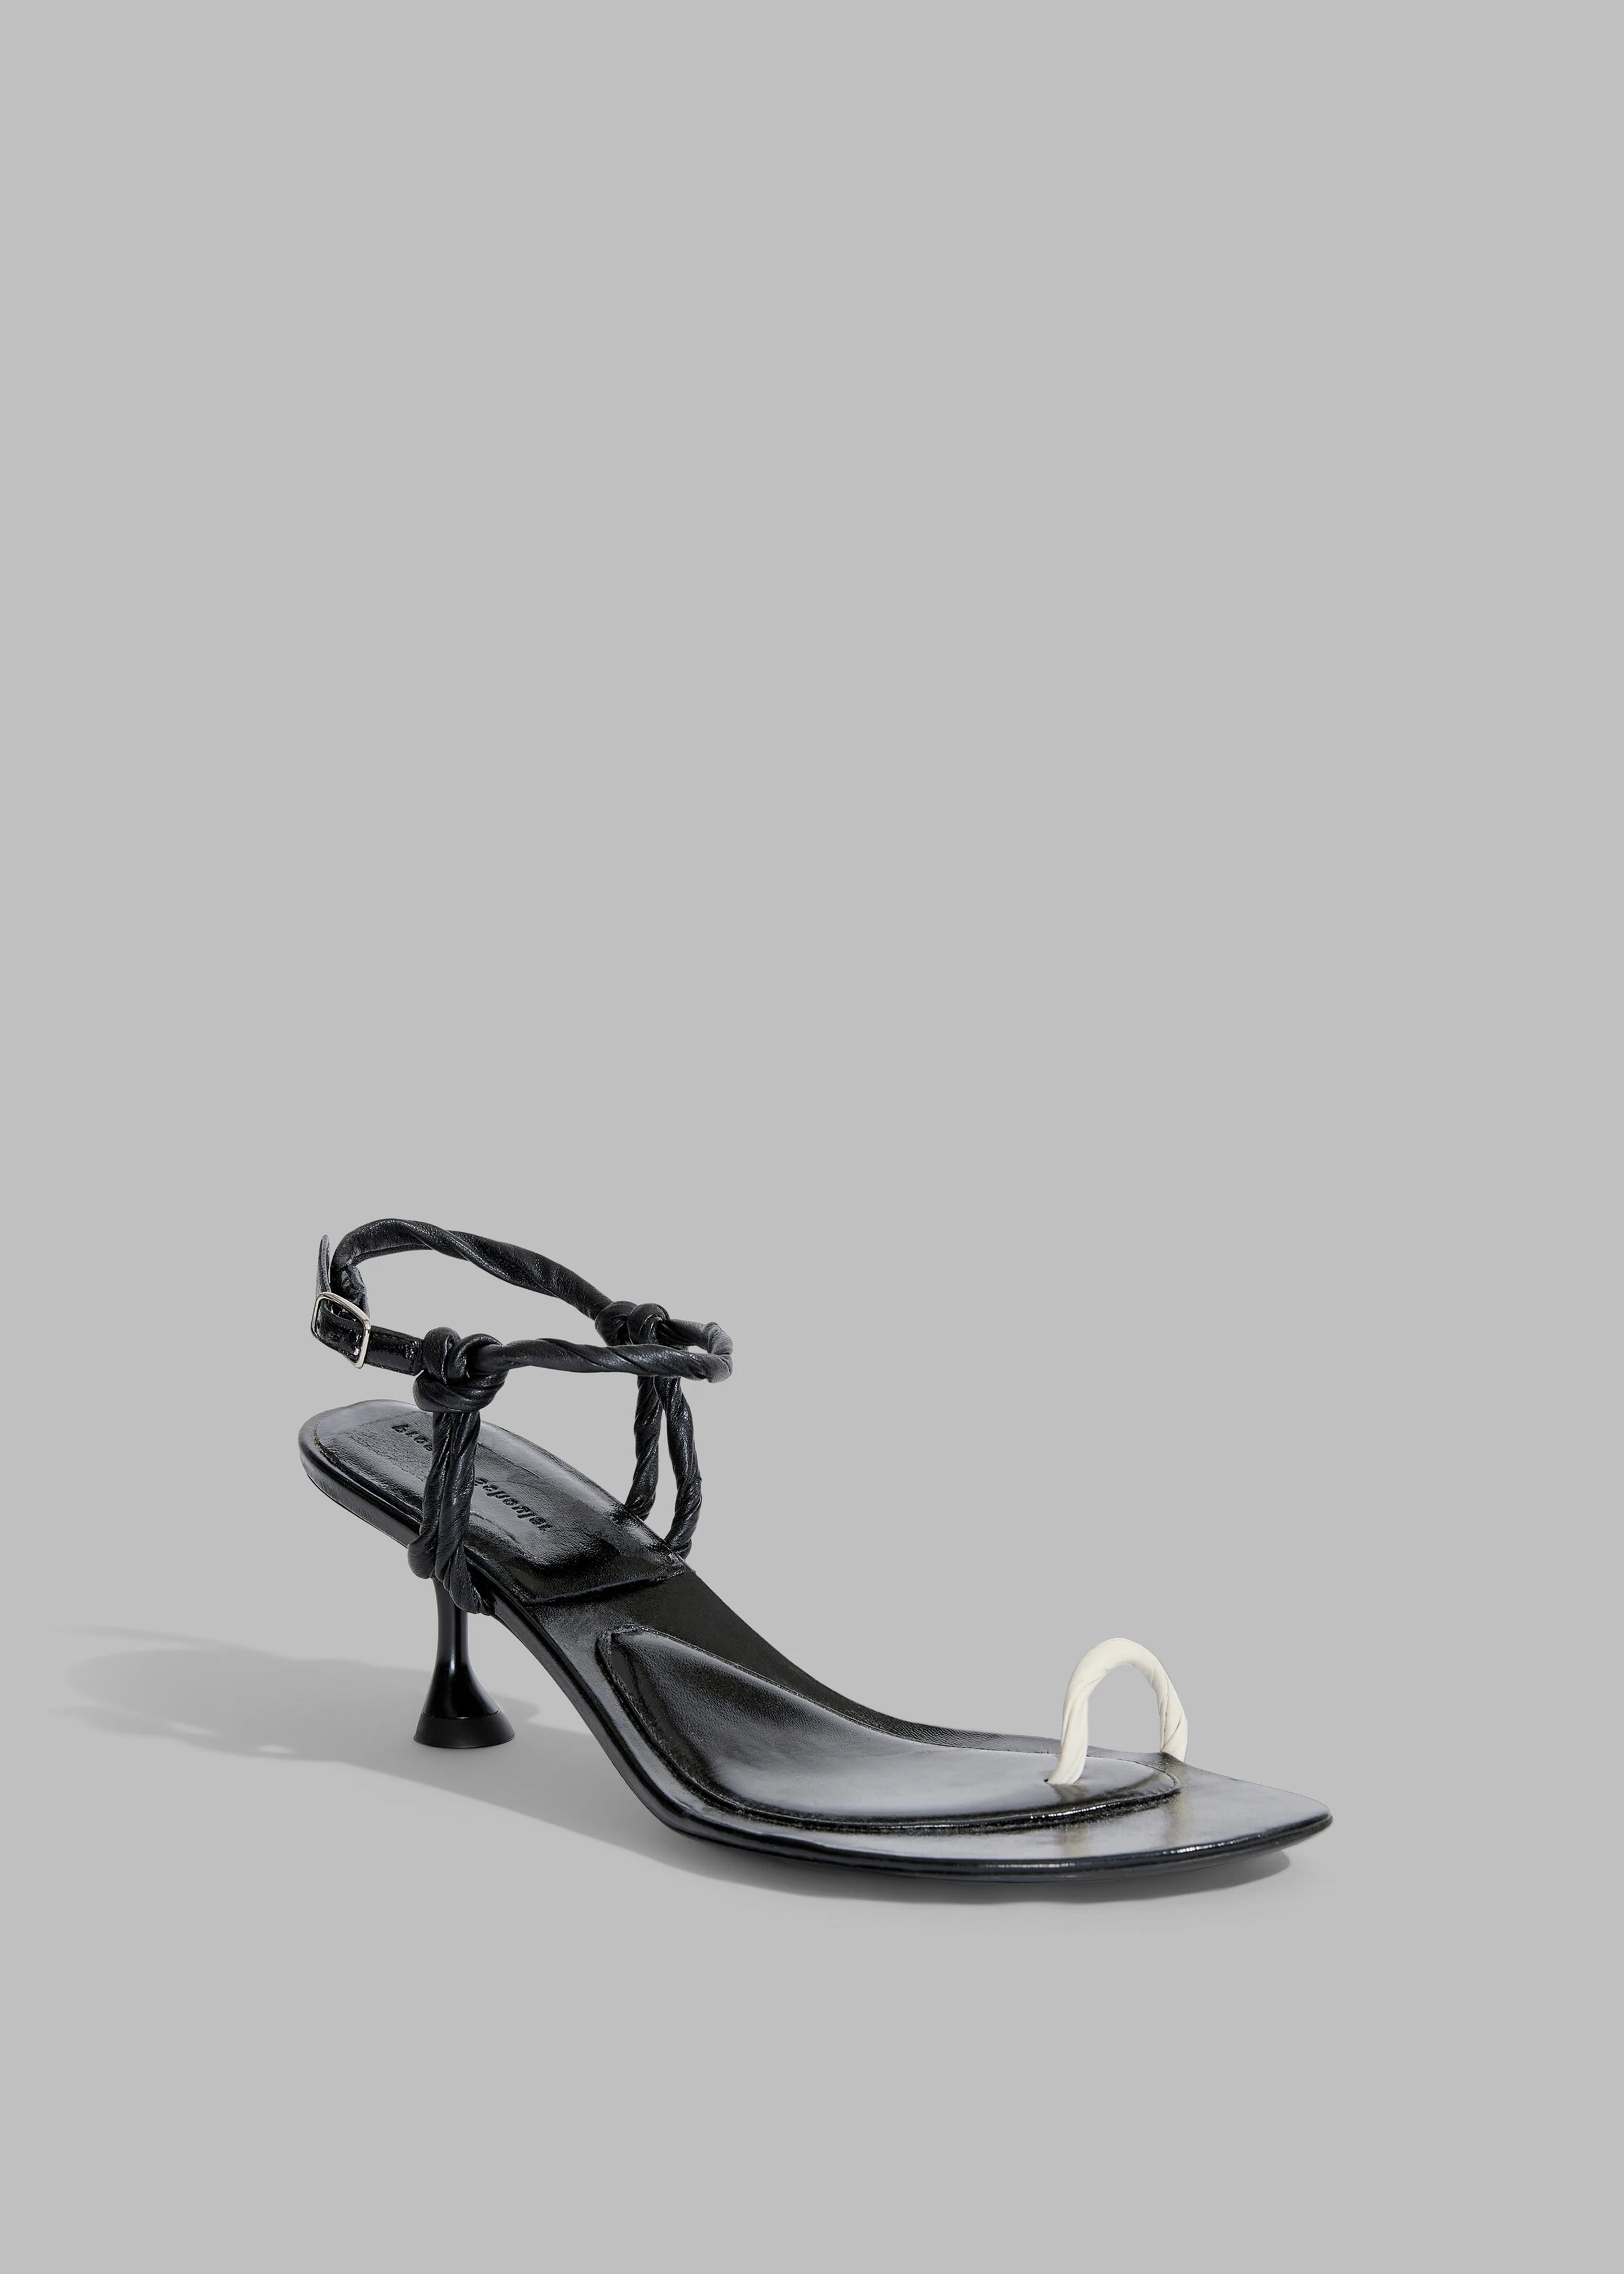 Proenza Schouler Tee Toe Ring Sandals - Black/Cream - 1